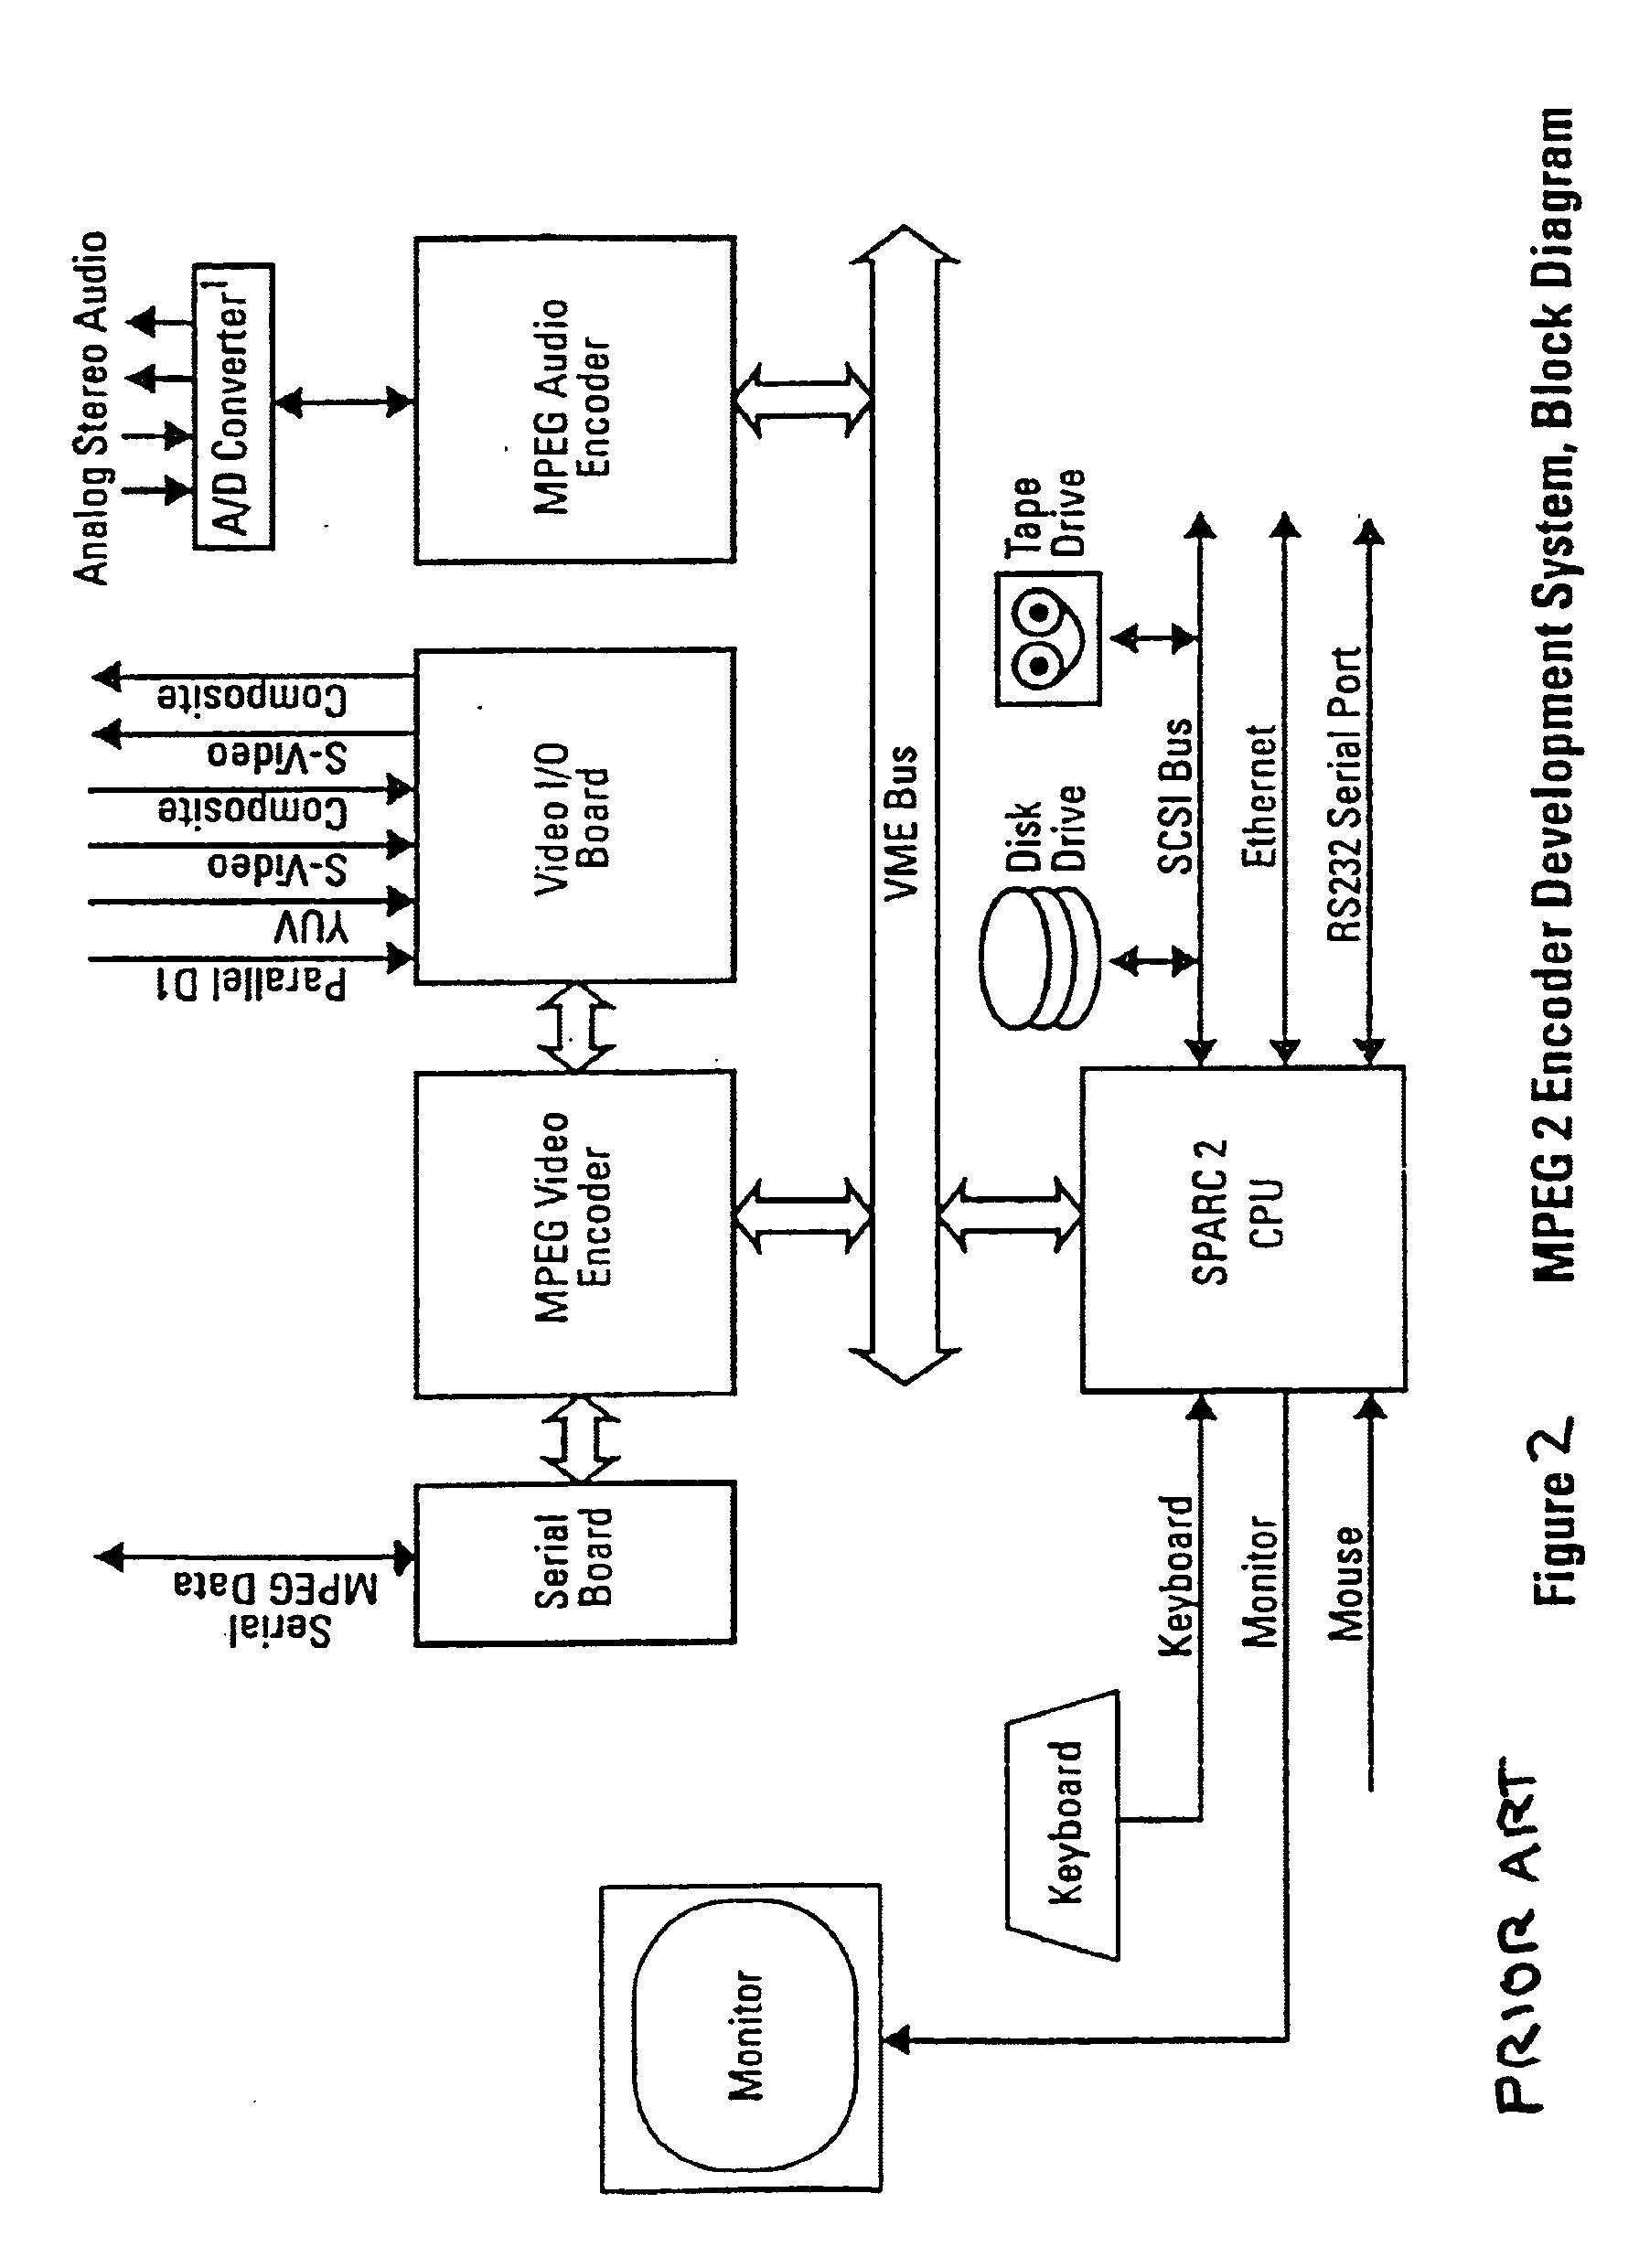 Program viewing apparatus and method